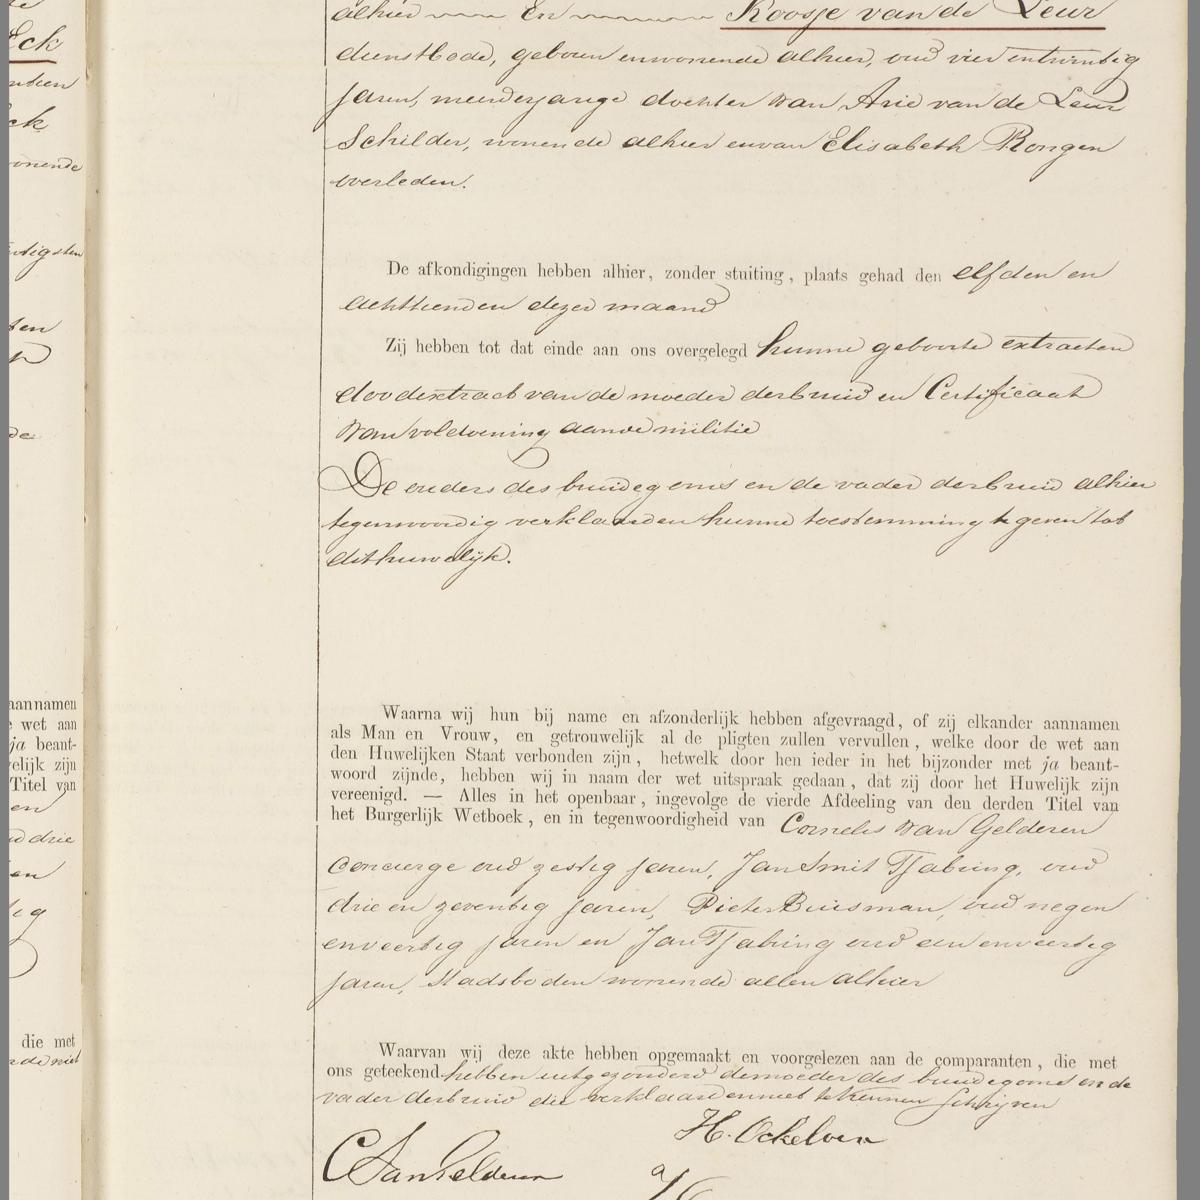 Civil registry of marriages, Utrecht, 1881, record 415